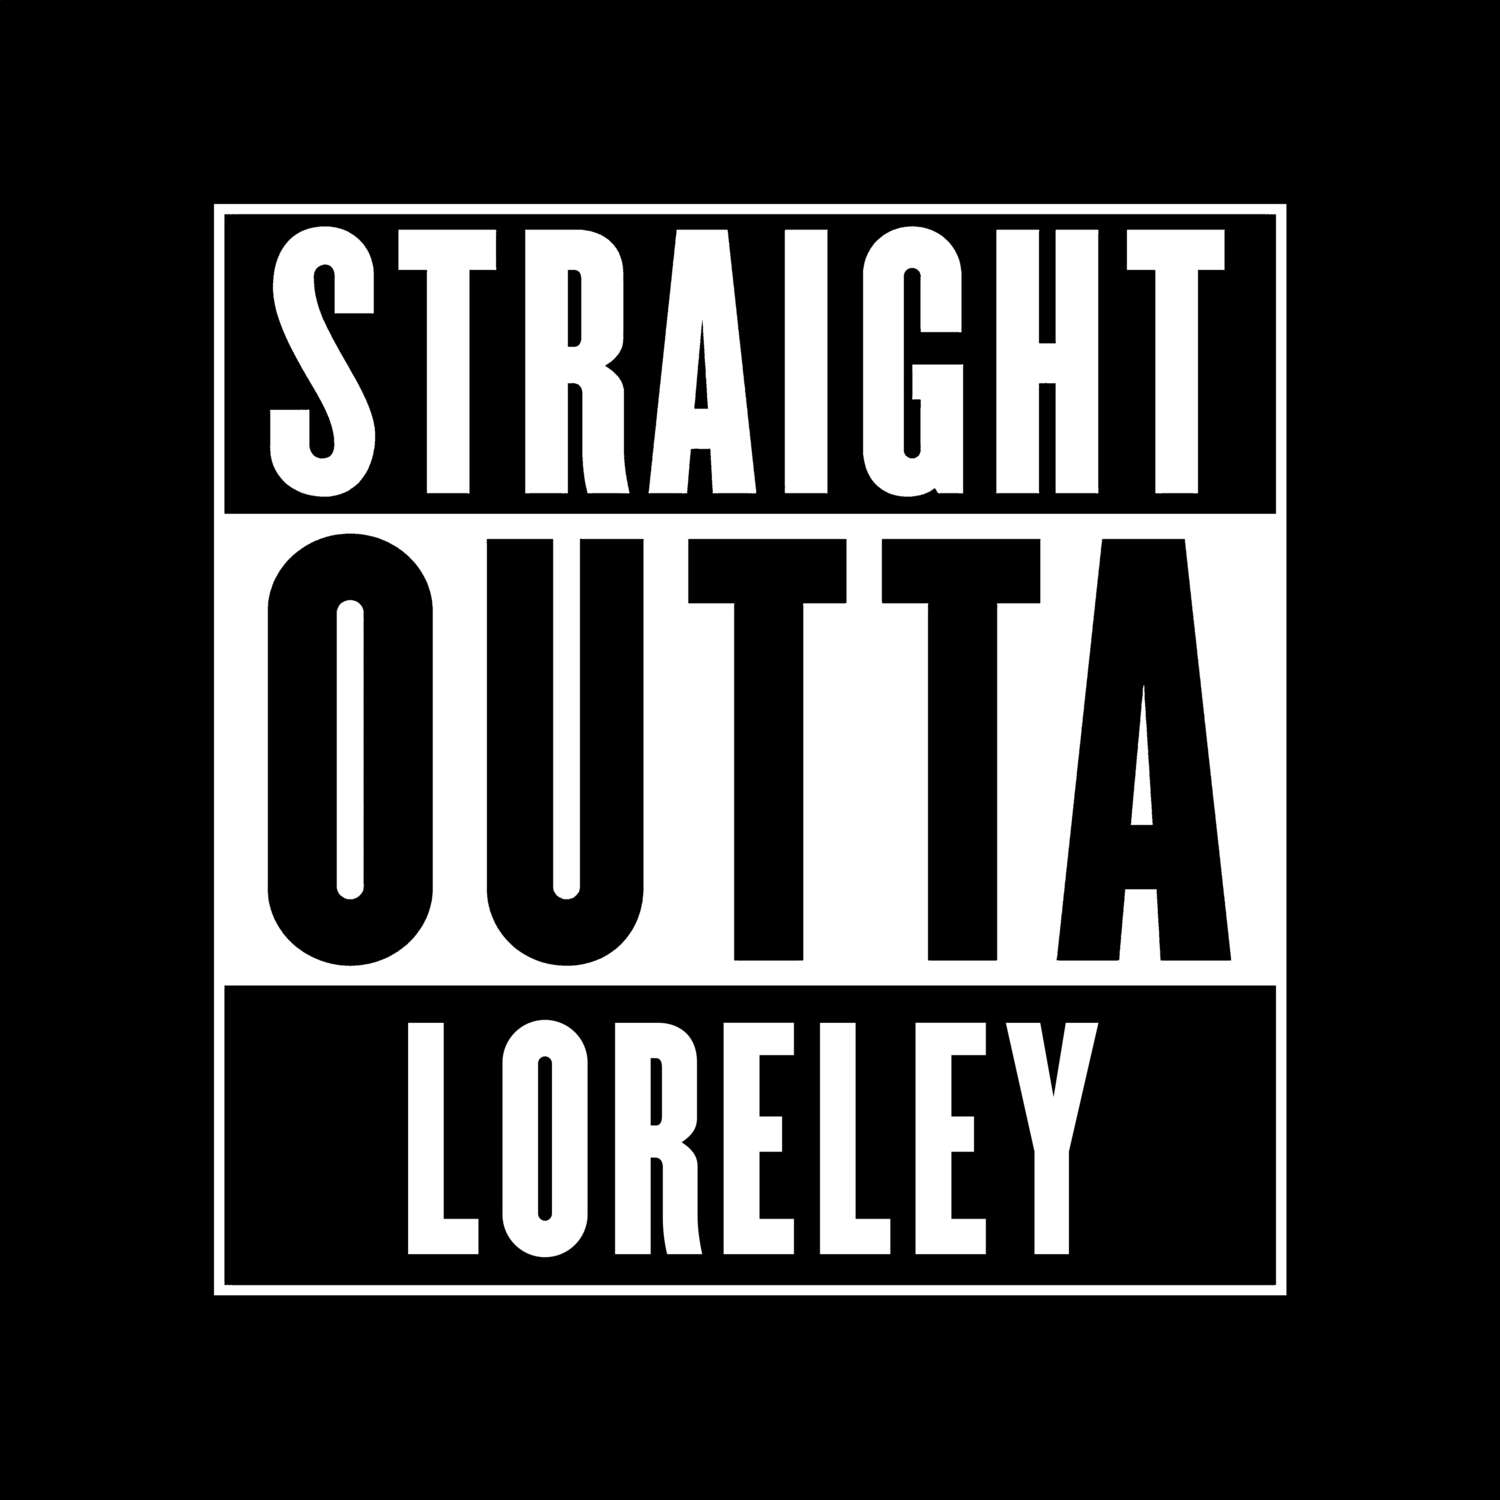 Loreley T-Shirt »Straight Outta«